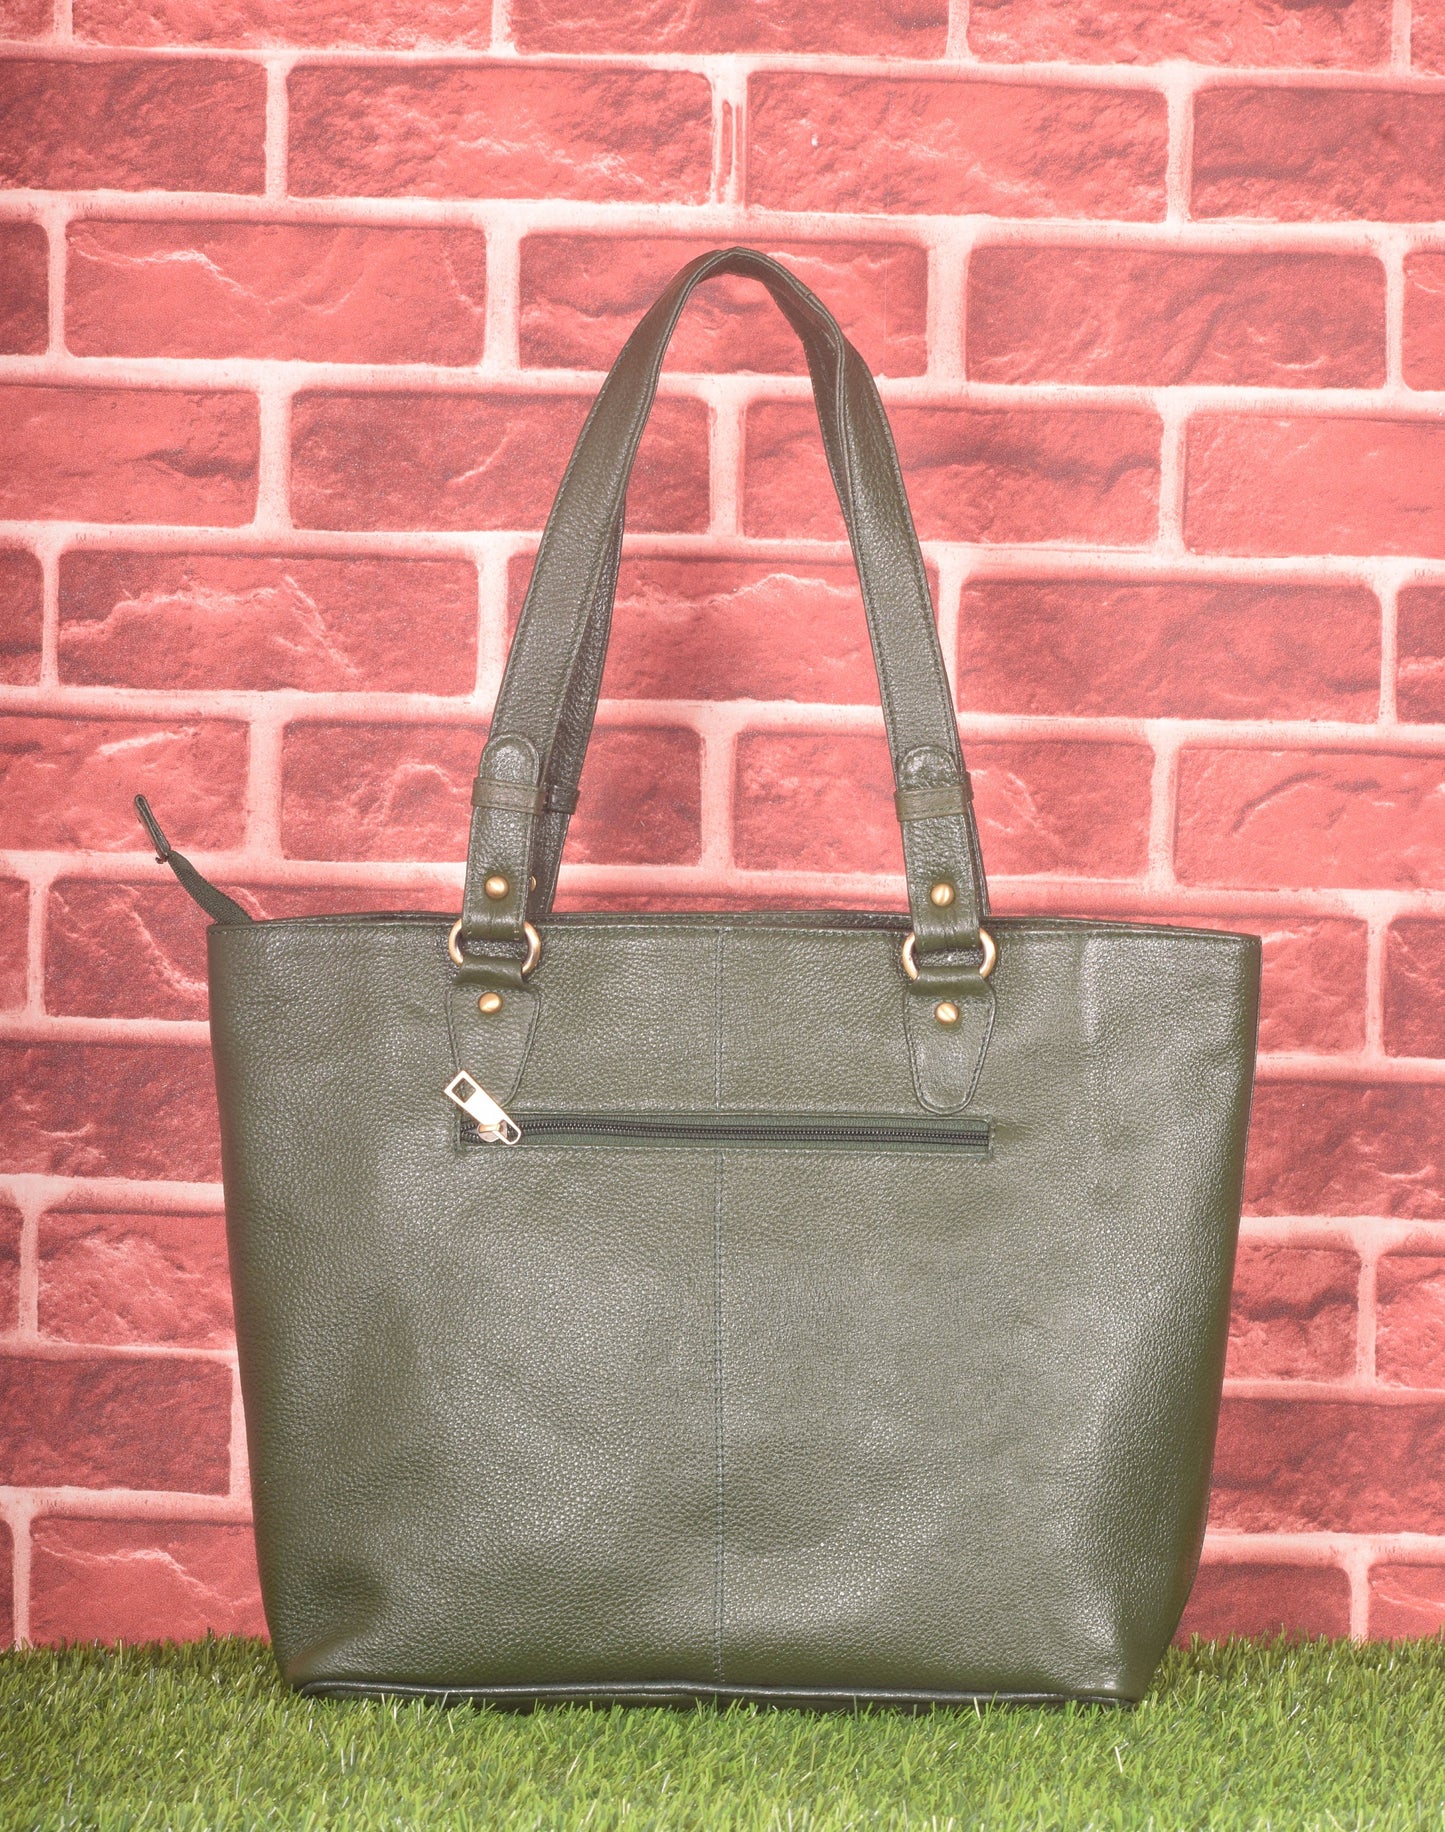 Green Leather Tote Bag with Zipper Shopper Purse Leather Shoulder Bag Large Marketing Bag Everyday Tote Bag Leather Purse Gift for Her